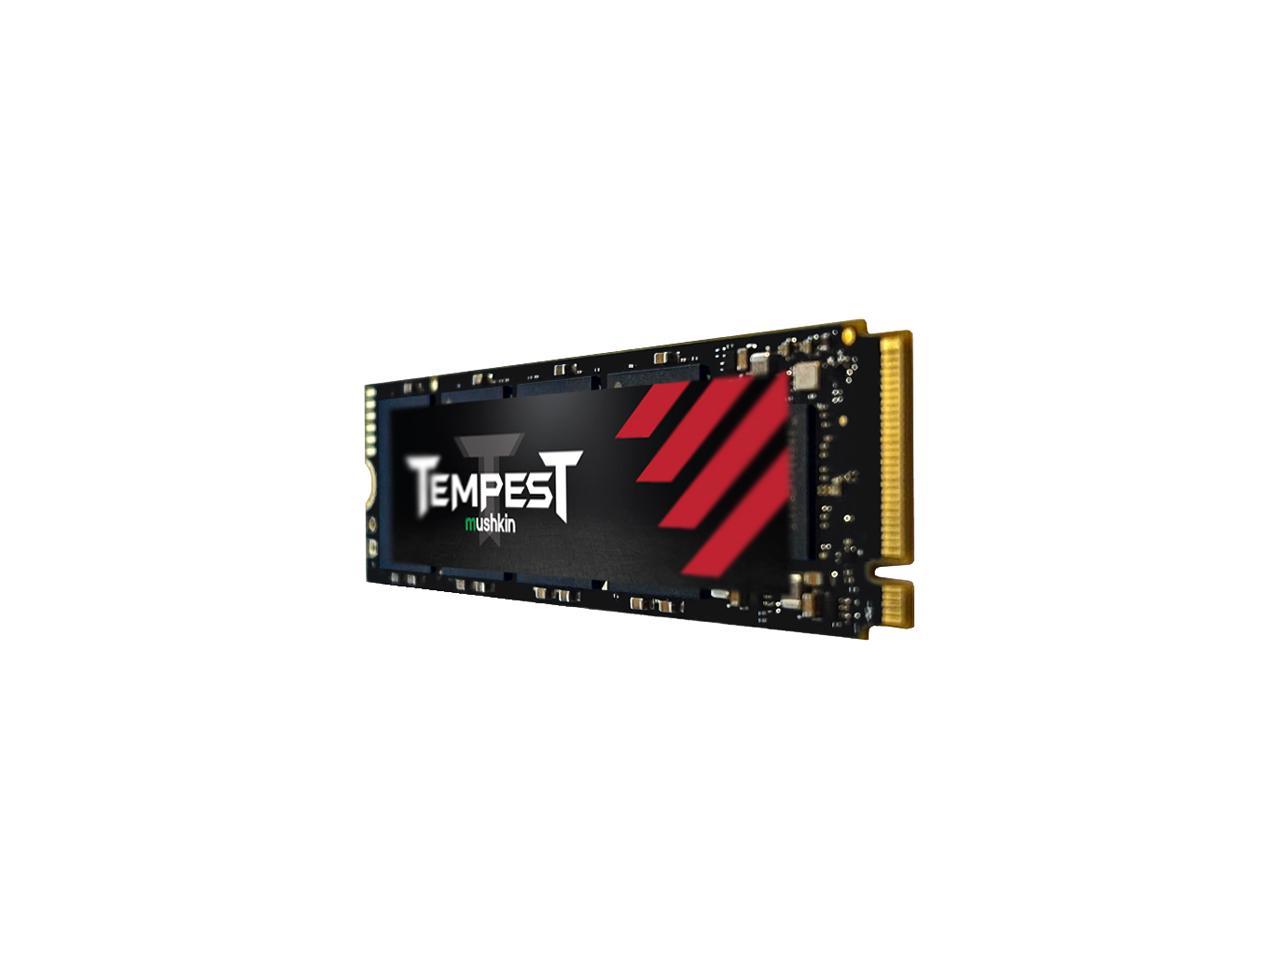 Mushkin Enhanced Tempest M.2 2280 256GB PCIe Gen3 x4 NVMe 1.4 3D NAND Internal Solid State Drive (SSD) MKNSSDTS256GB-D8